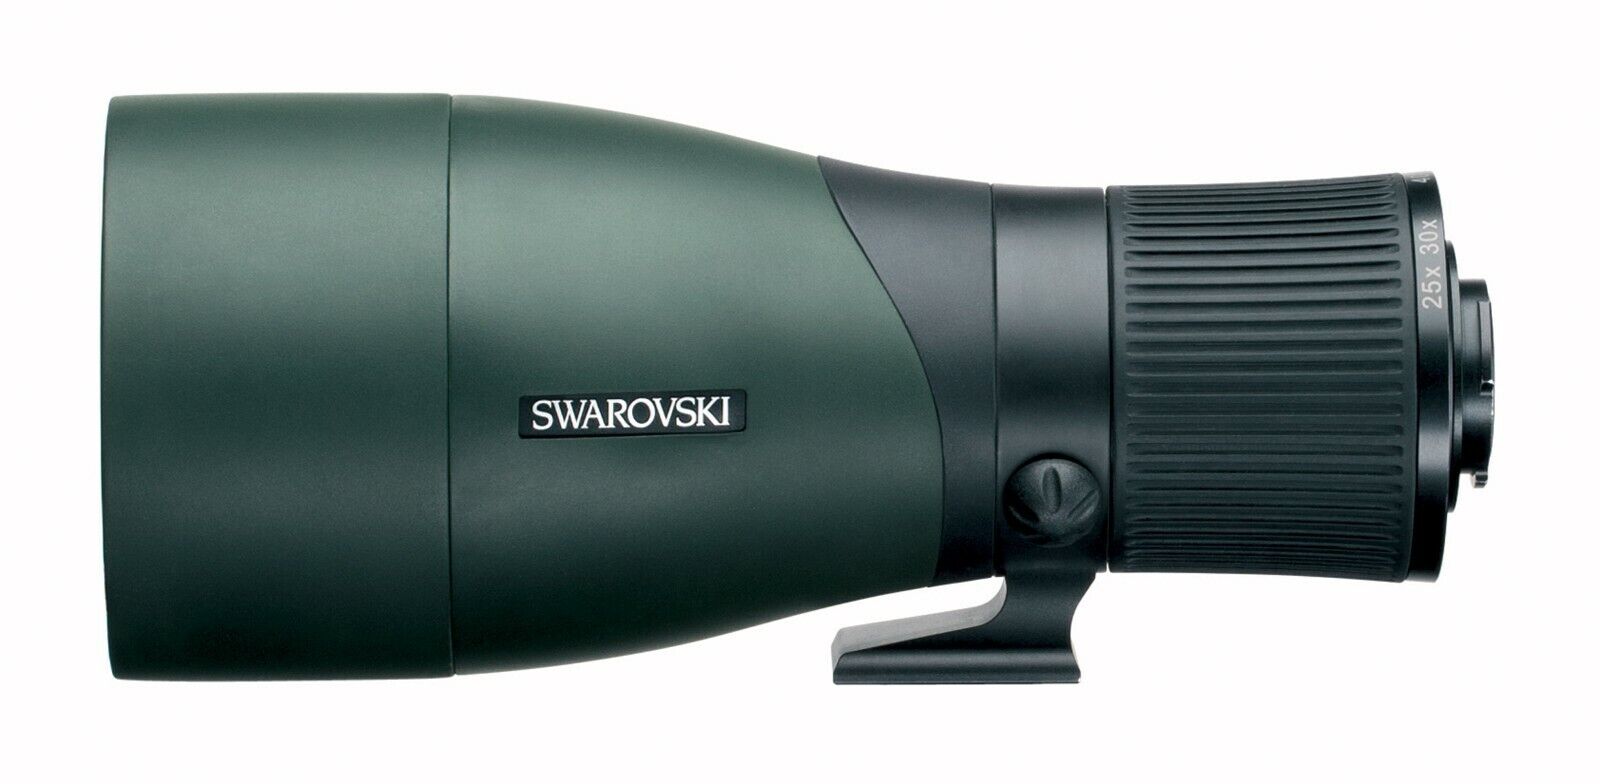 Swarovski Spotting Scope 85mm Modular Objective Lens - Model 48885